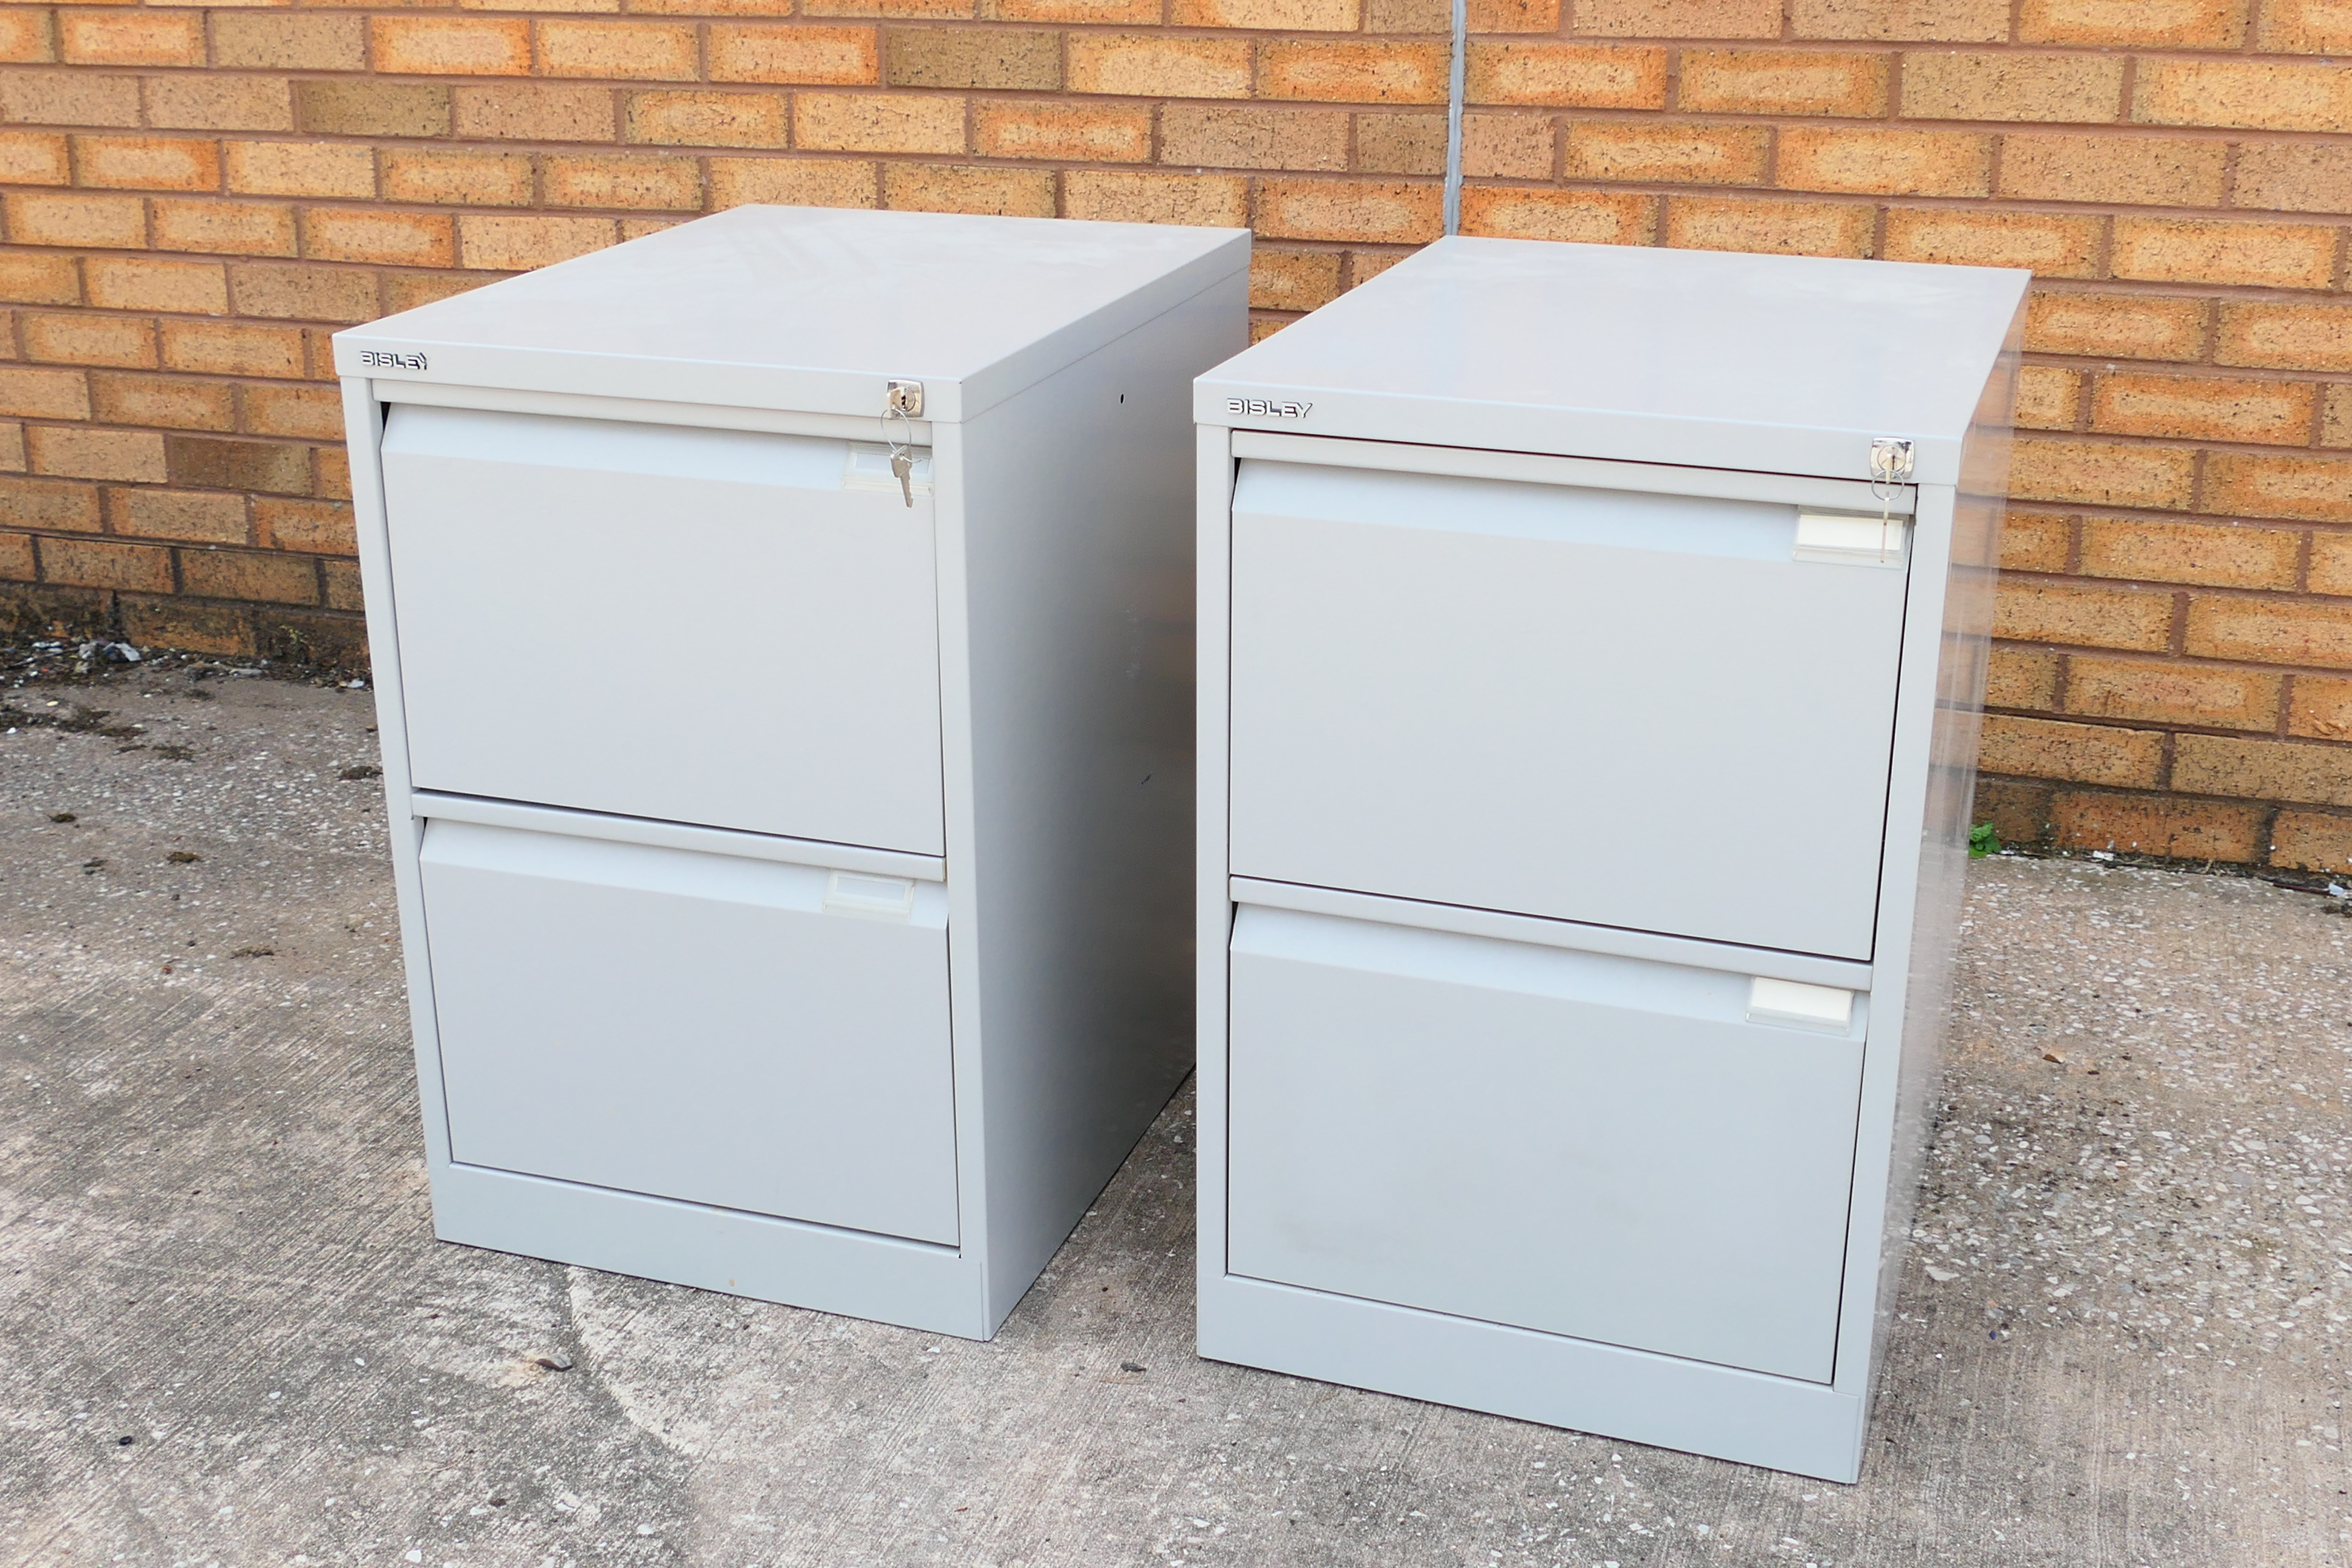 Two metal filing cabinets measuring 71 cm x 47 cm x 62 cm.